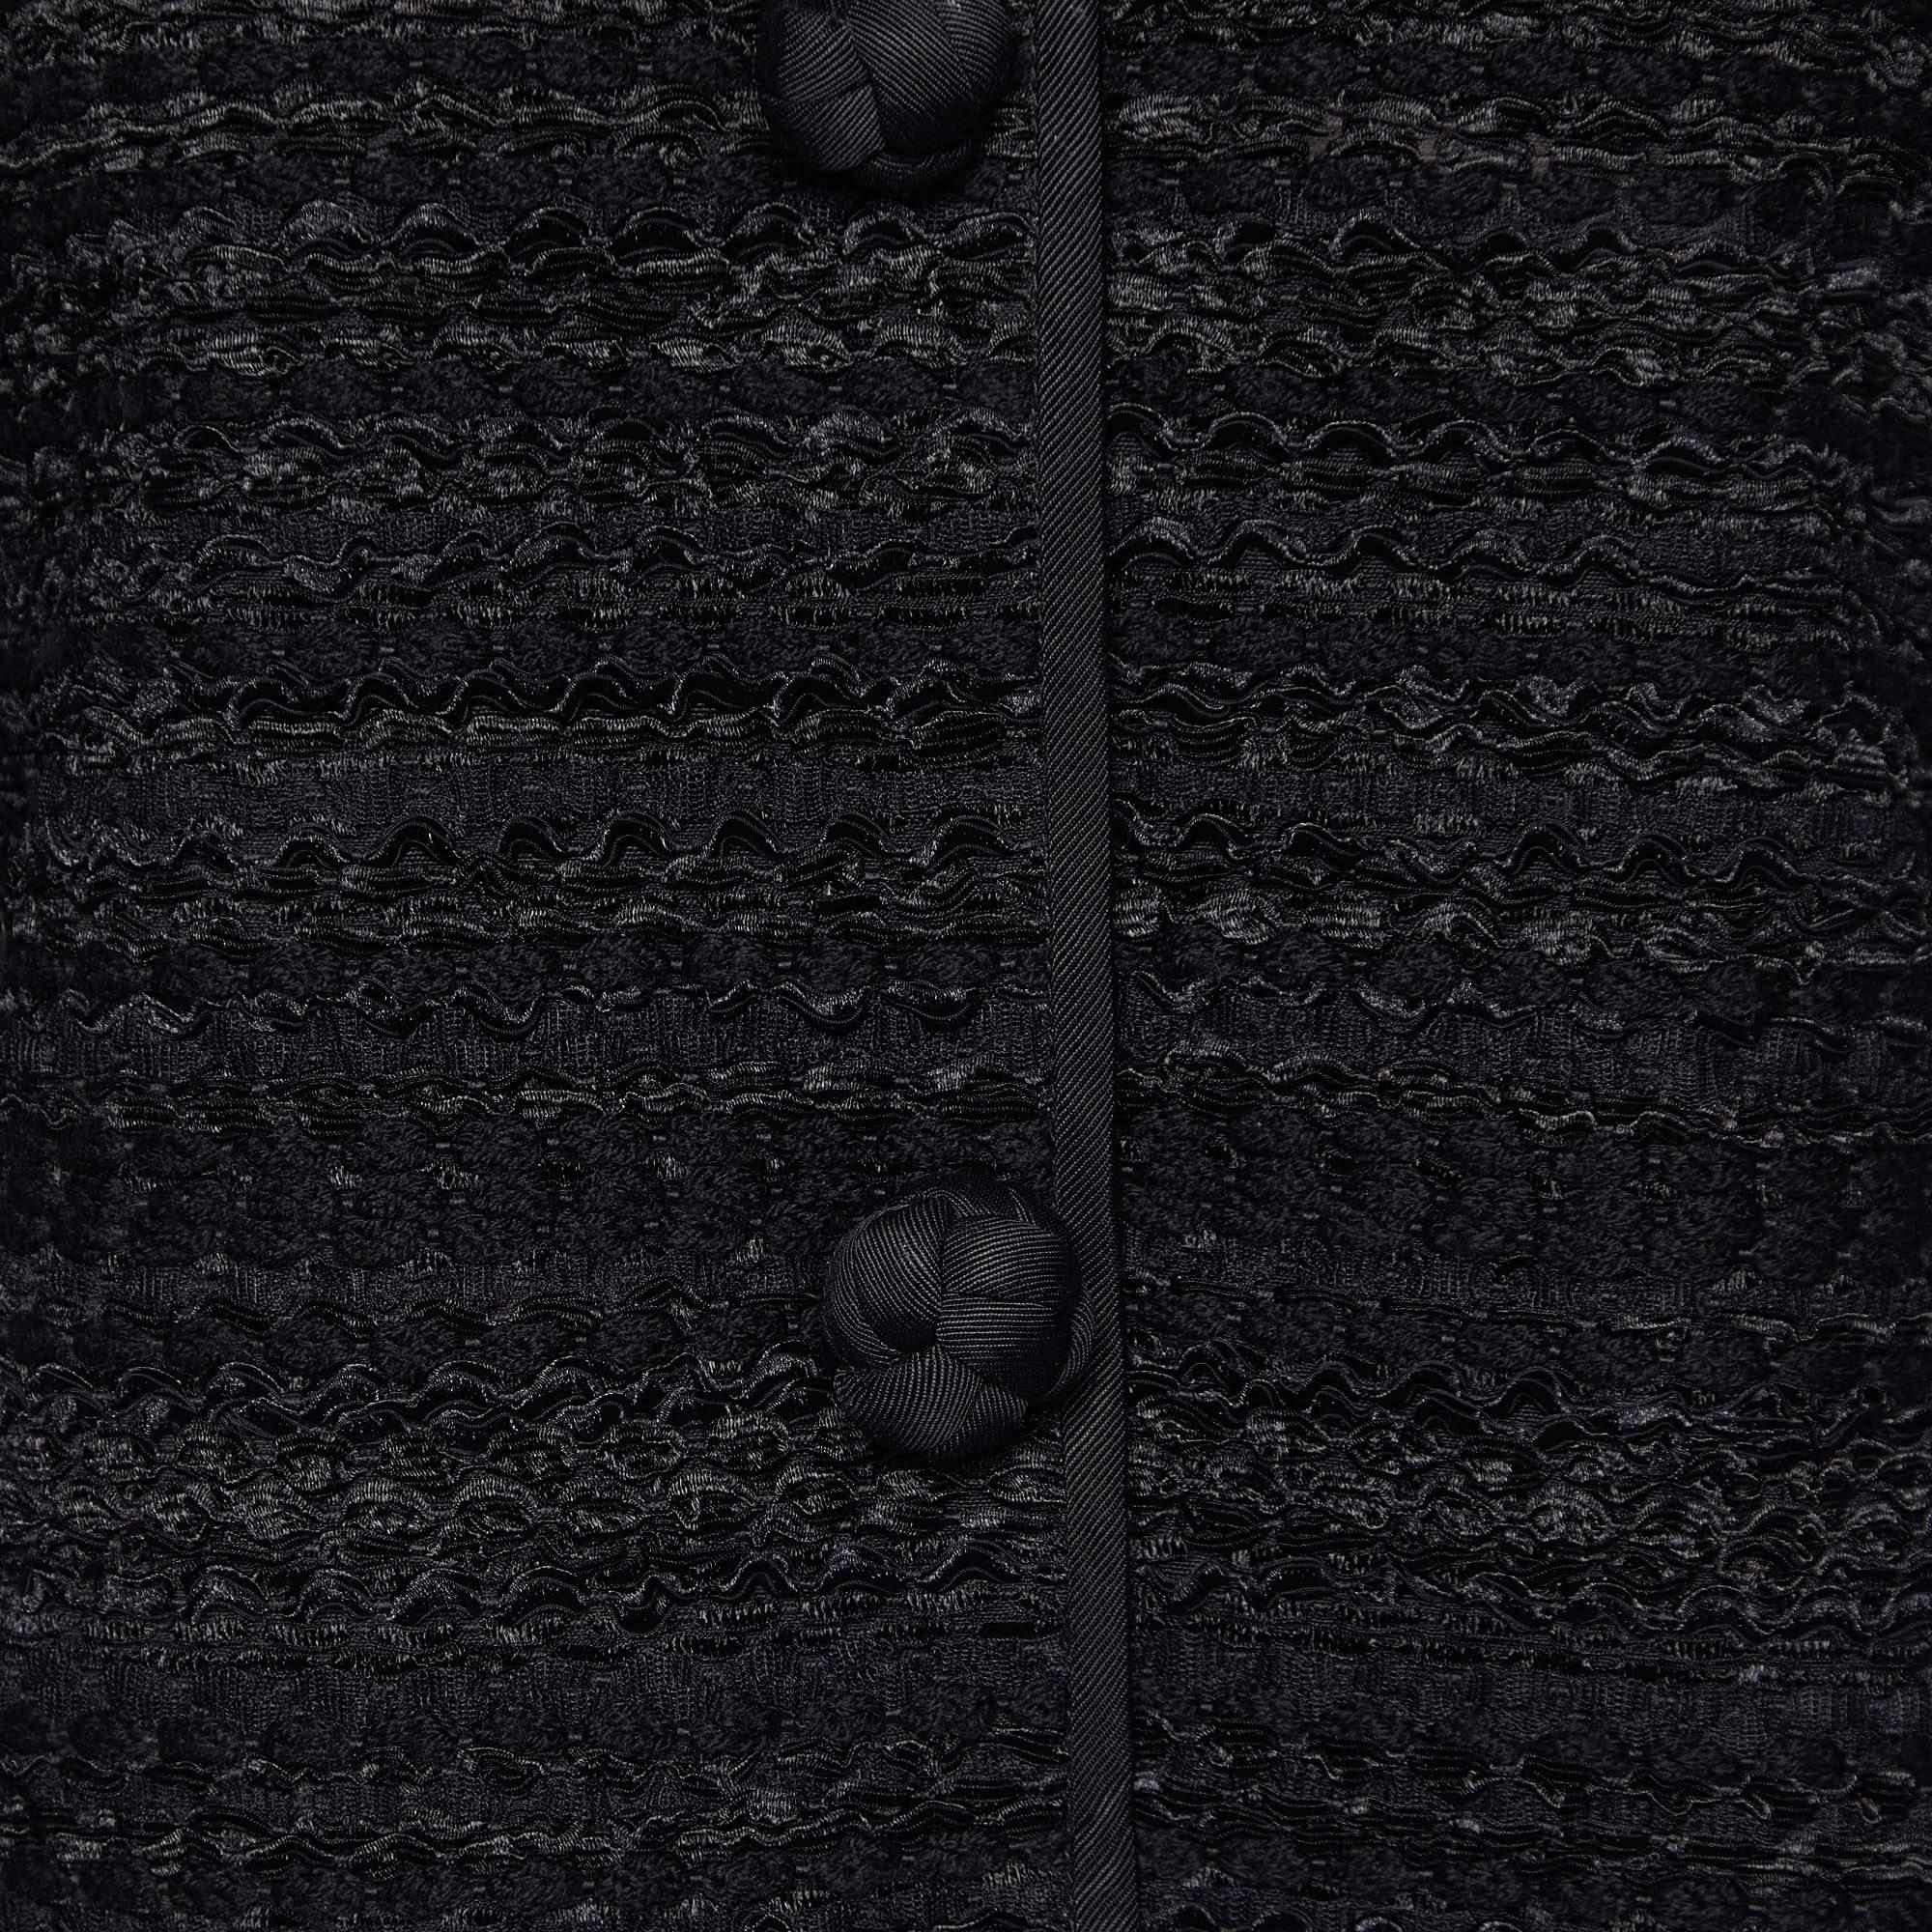 Armani Collezioni Black Tweed Button Front Jacket S In Excellent Condition For Sale In Dubai, Al Qouz 2